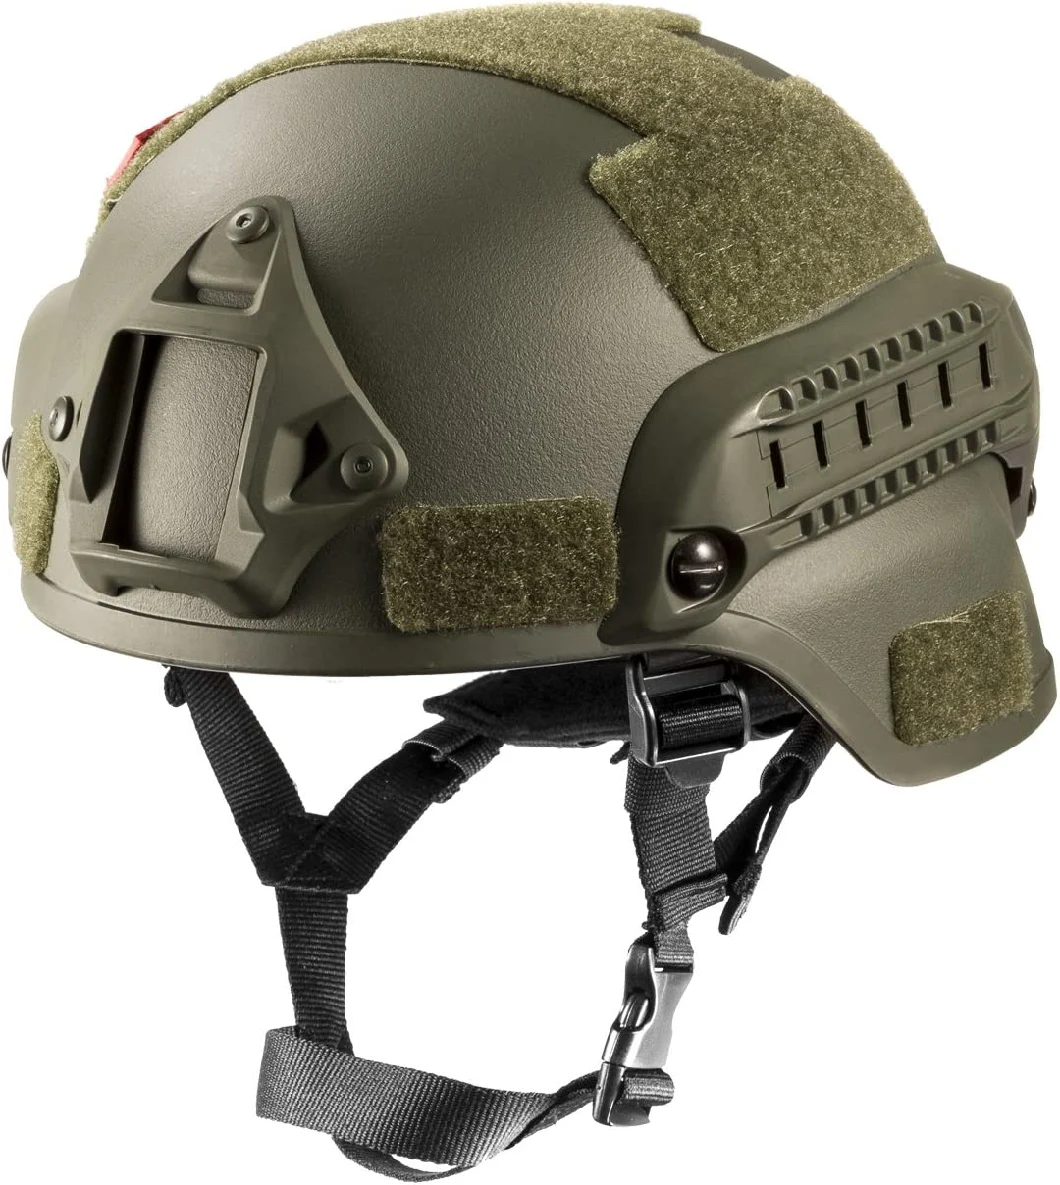 Military Mich Plastic Adjustable Pulletproof Tactical Helmet with Ear Protection Helmet